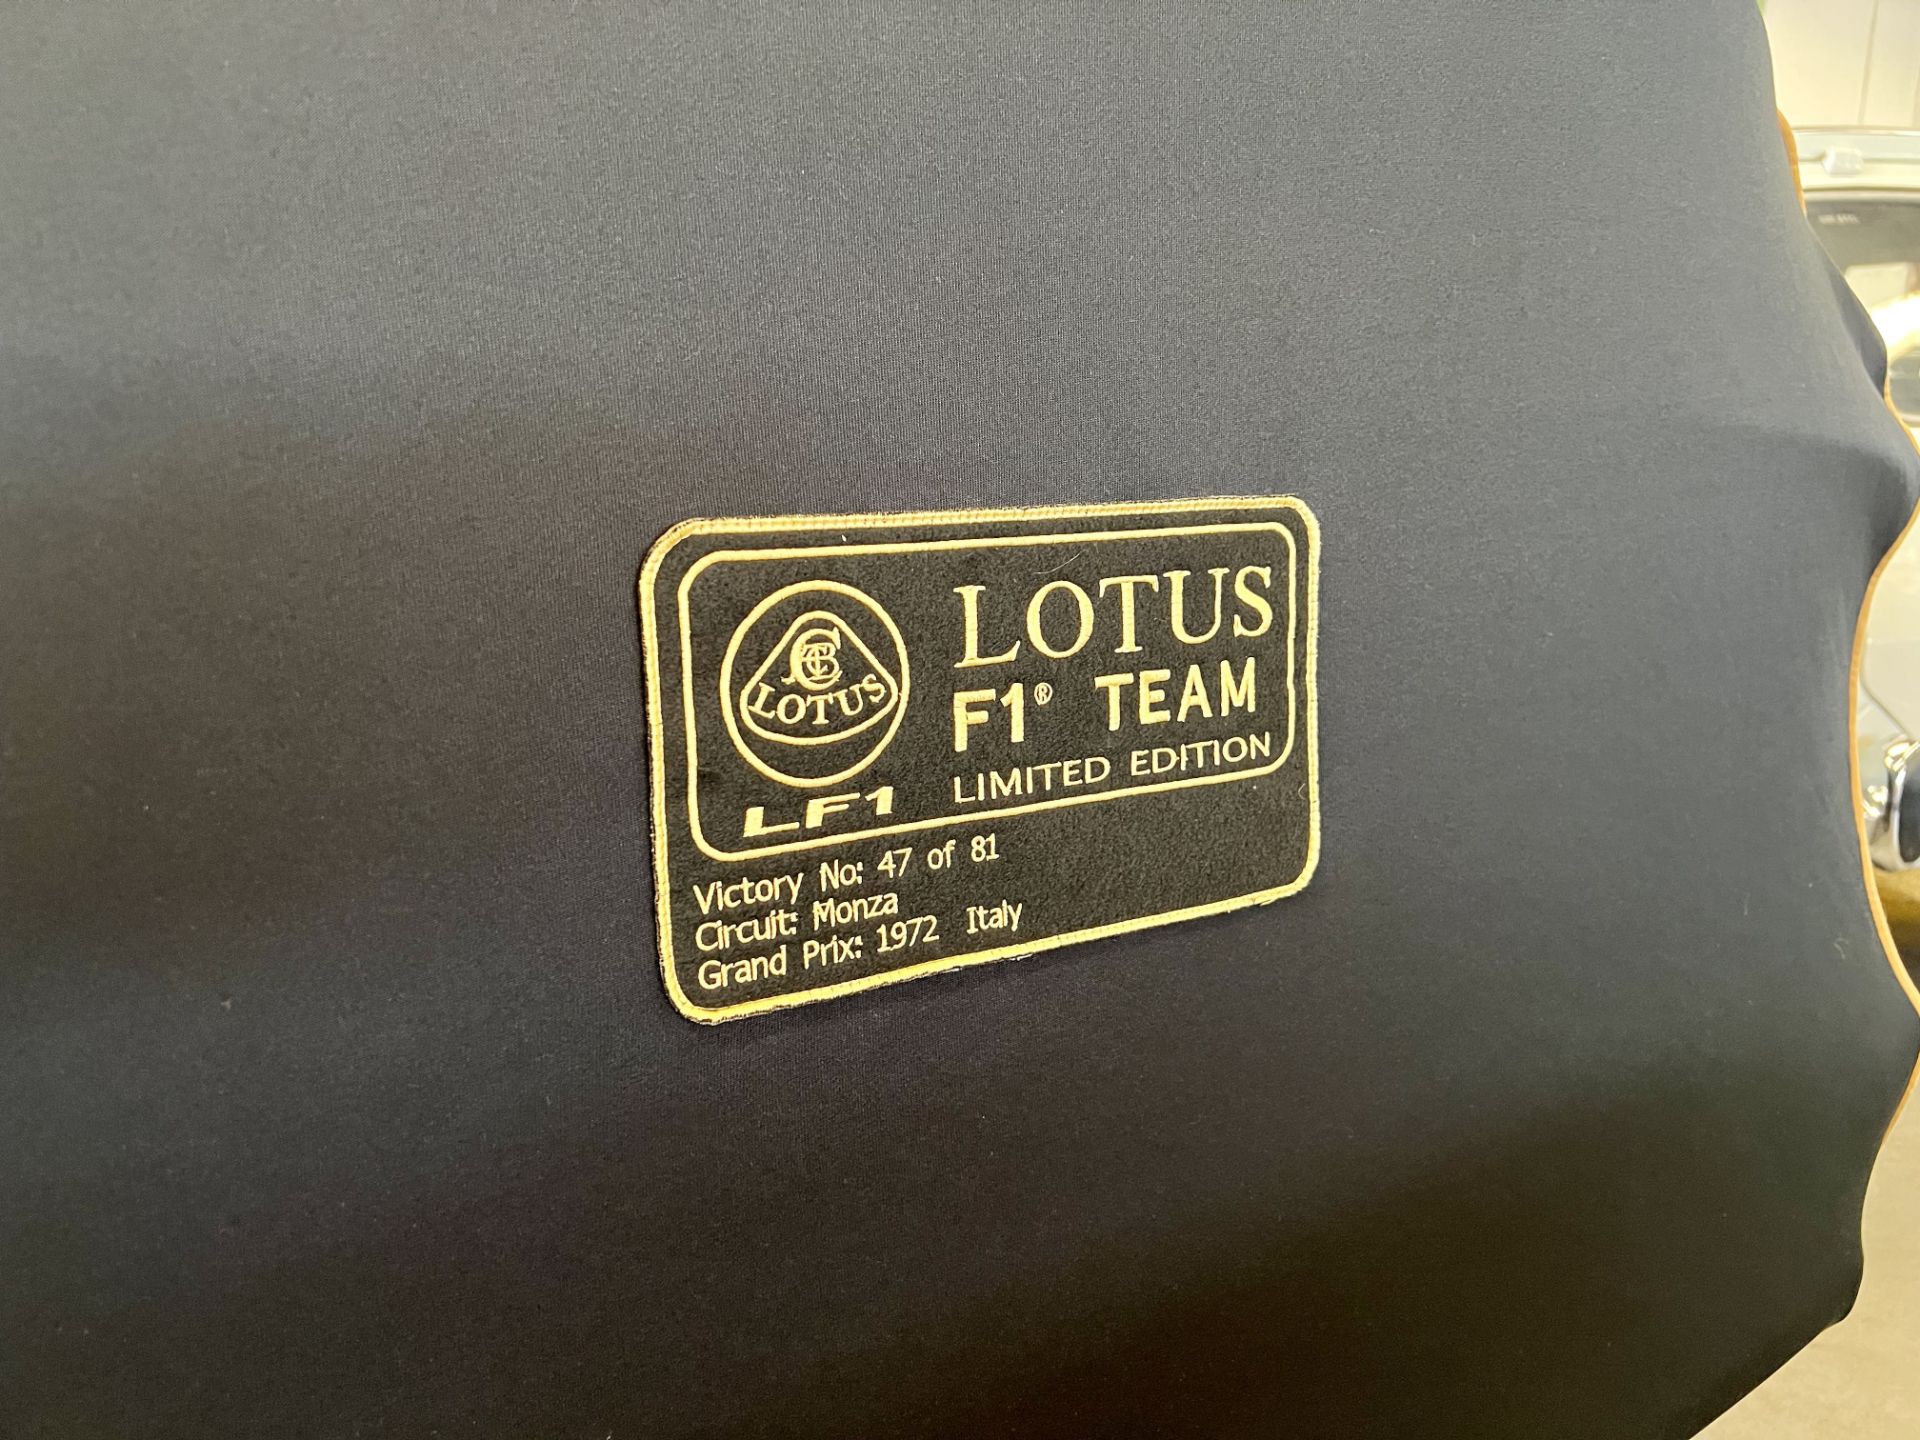 Lotus Exige LF1 - Image 37 of 37